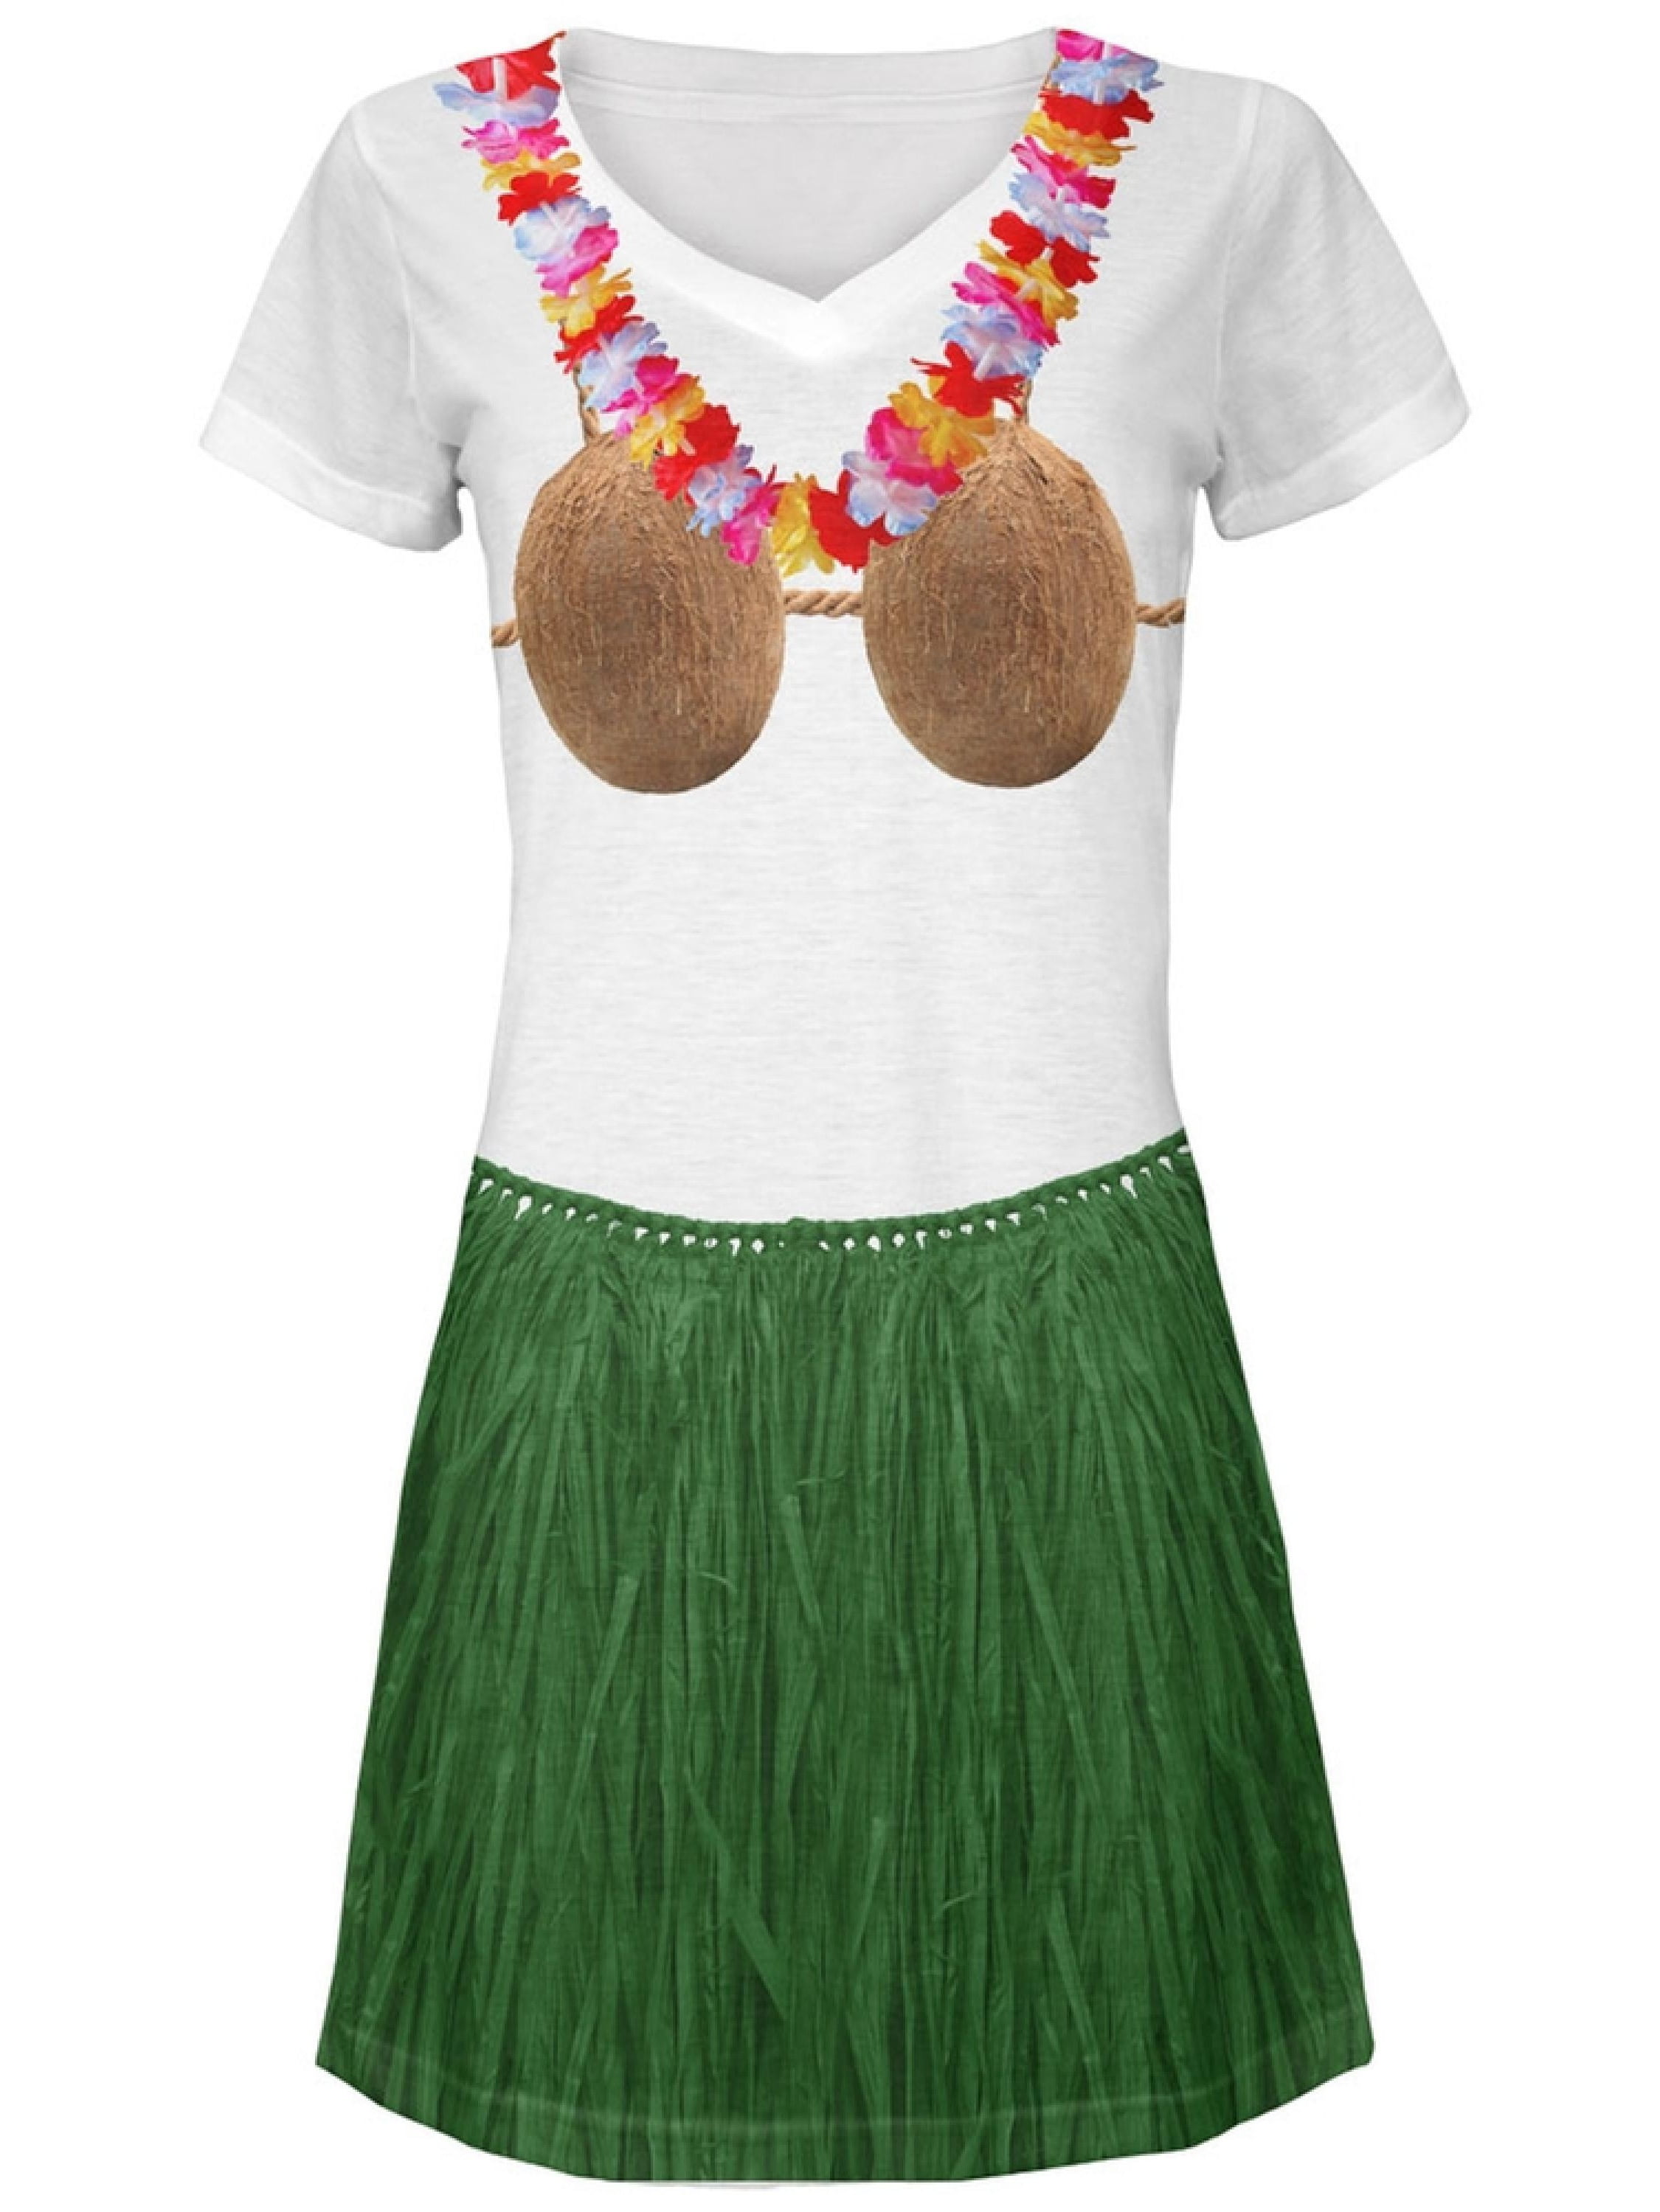 Check out this Second Life Marketplace Item!  Coconut bra, Hawaiian grass  skirt, Hawaiian girls